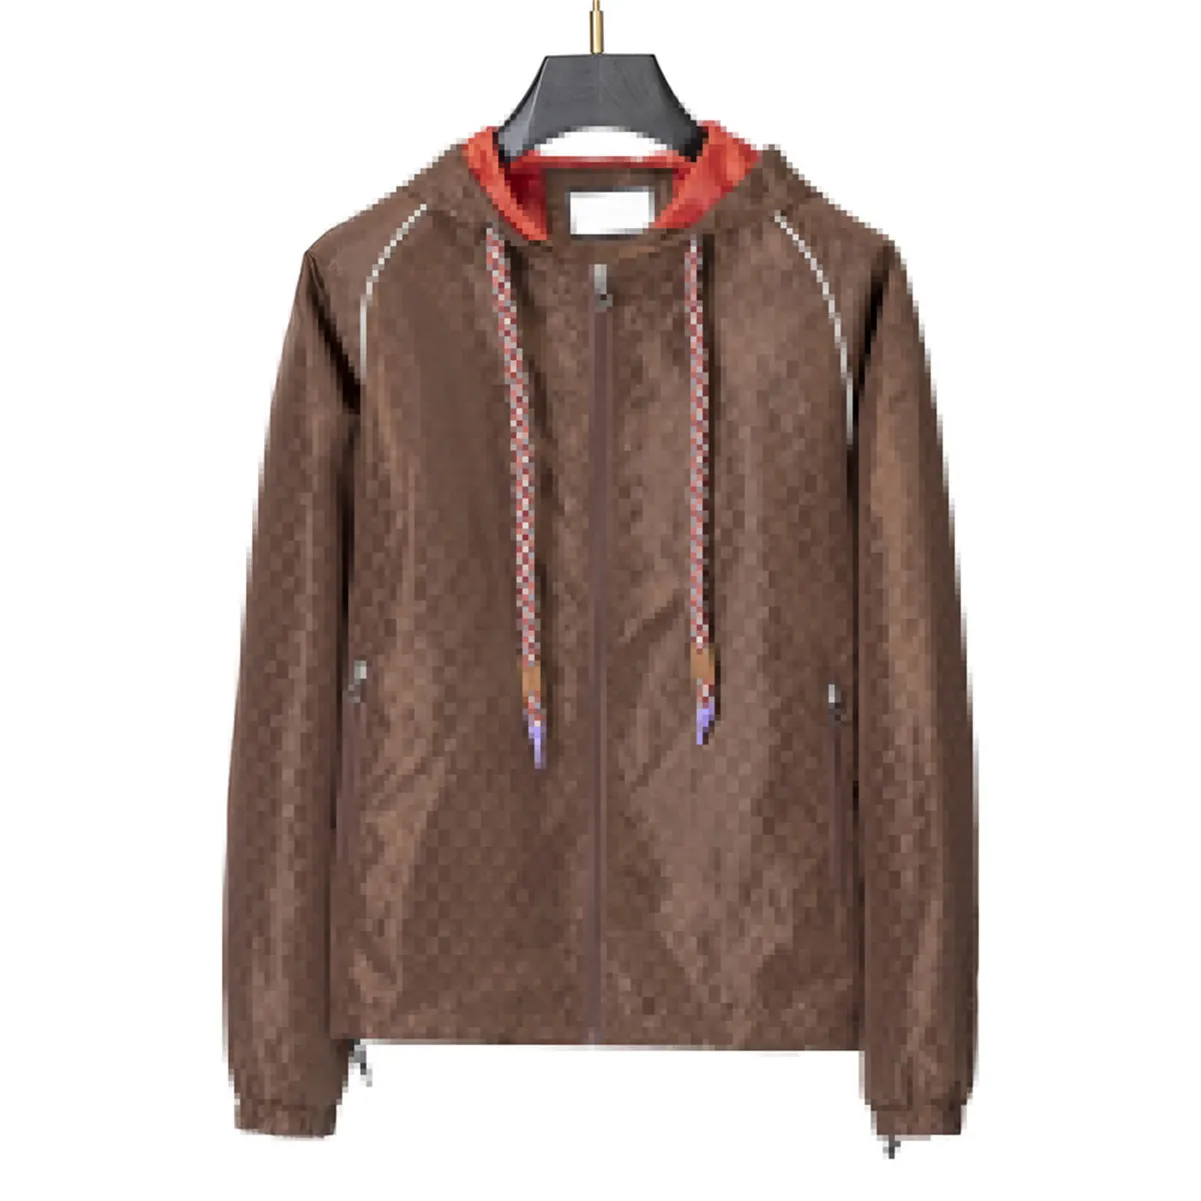 Ssyy 2023 Men's Jacket Fashion Designer Coat Sweatshirt سترة ربيع وسقوط Coat Coat Hoodie Hoodie Hoodie للرجال Hoodie M-XXXL 99188888888888